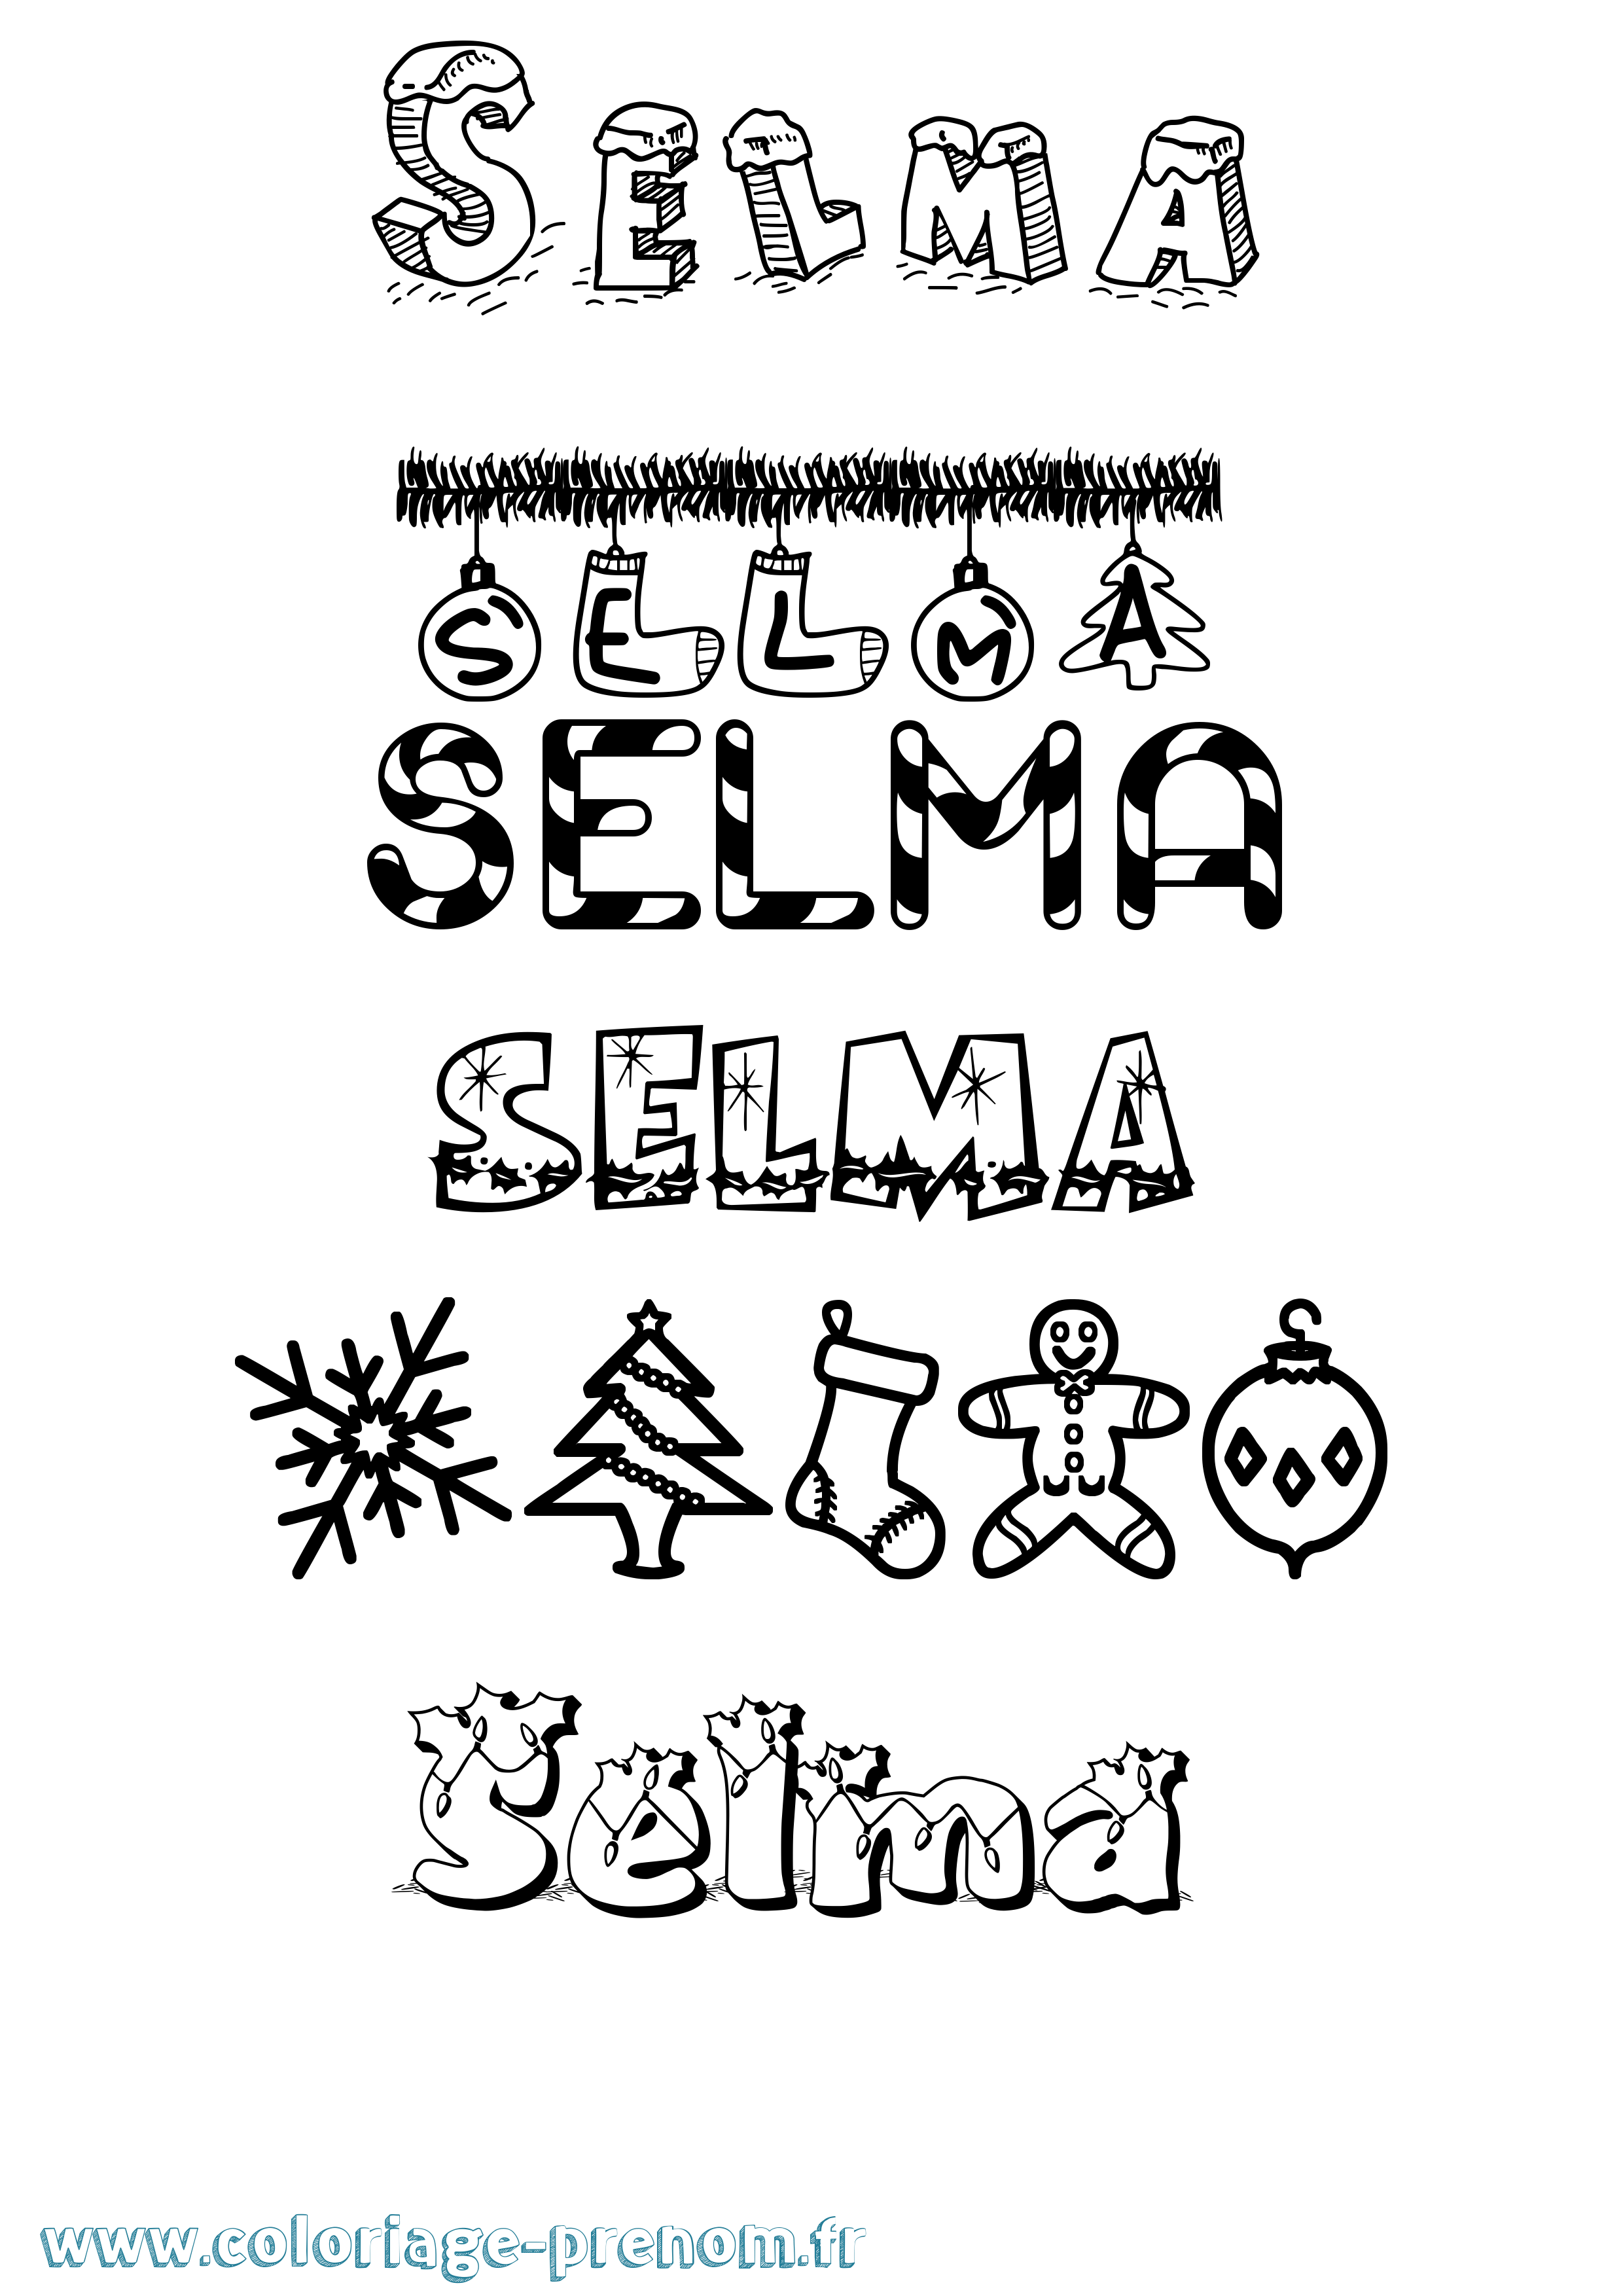 Coloriage prénom Selma Noël